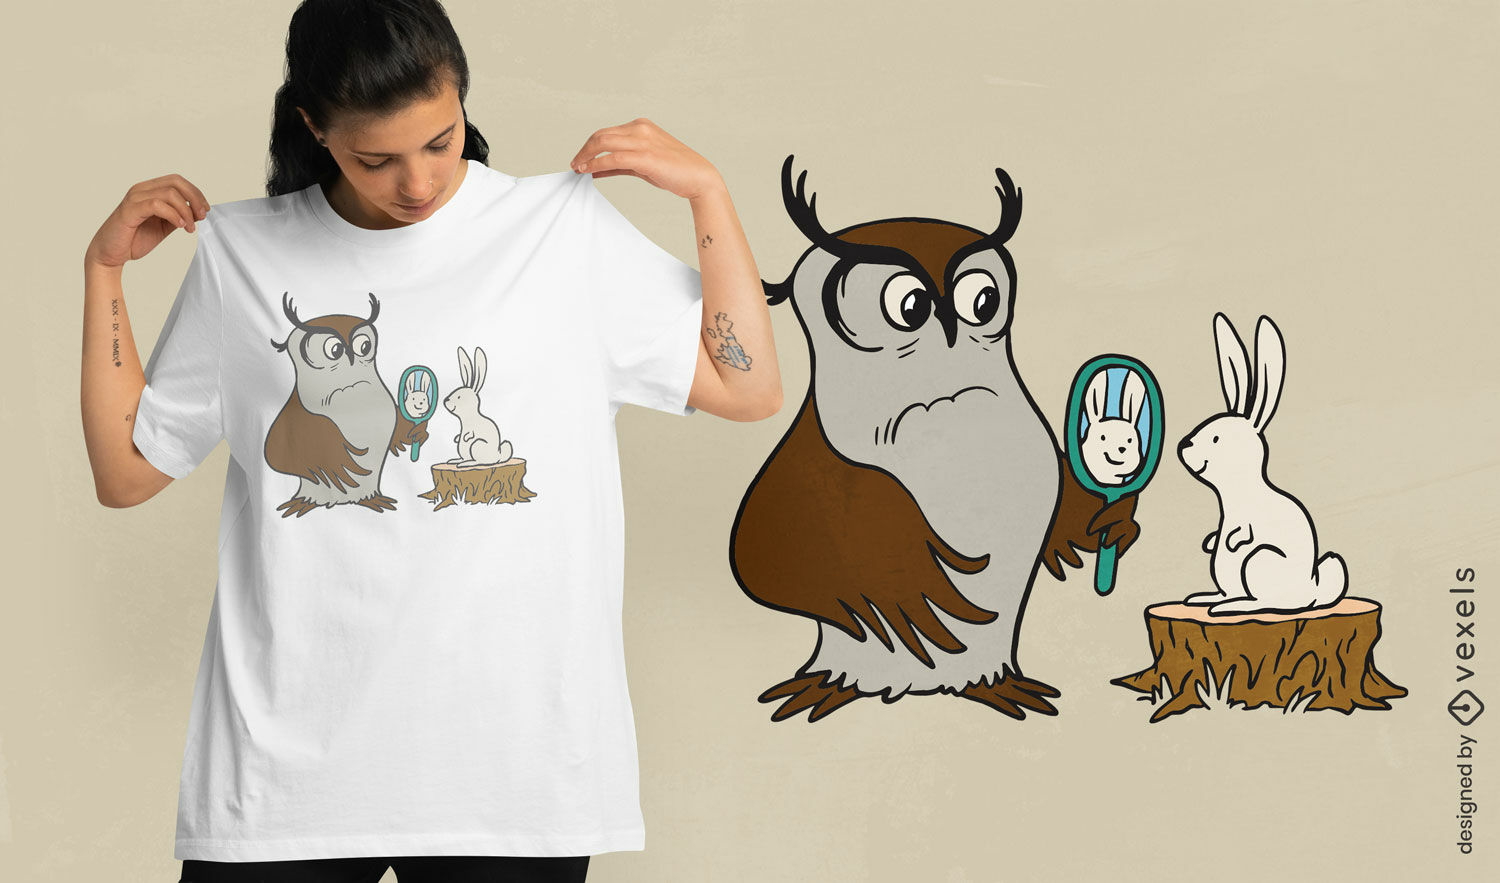 Owl and rabbit mirror t-shirt design